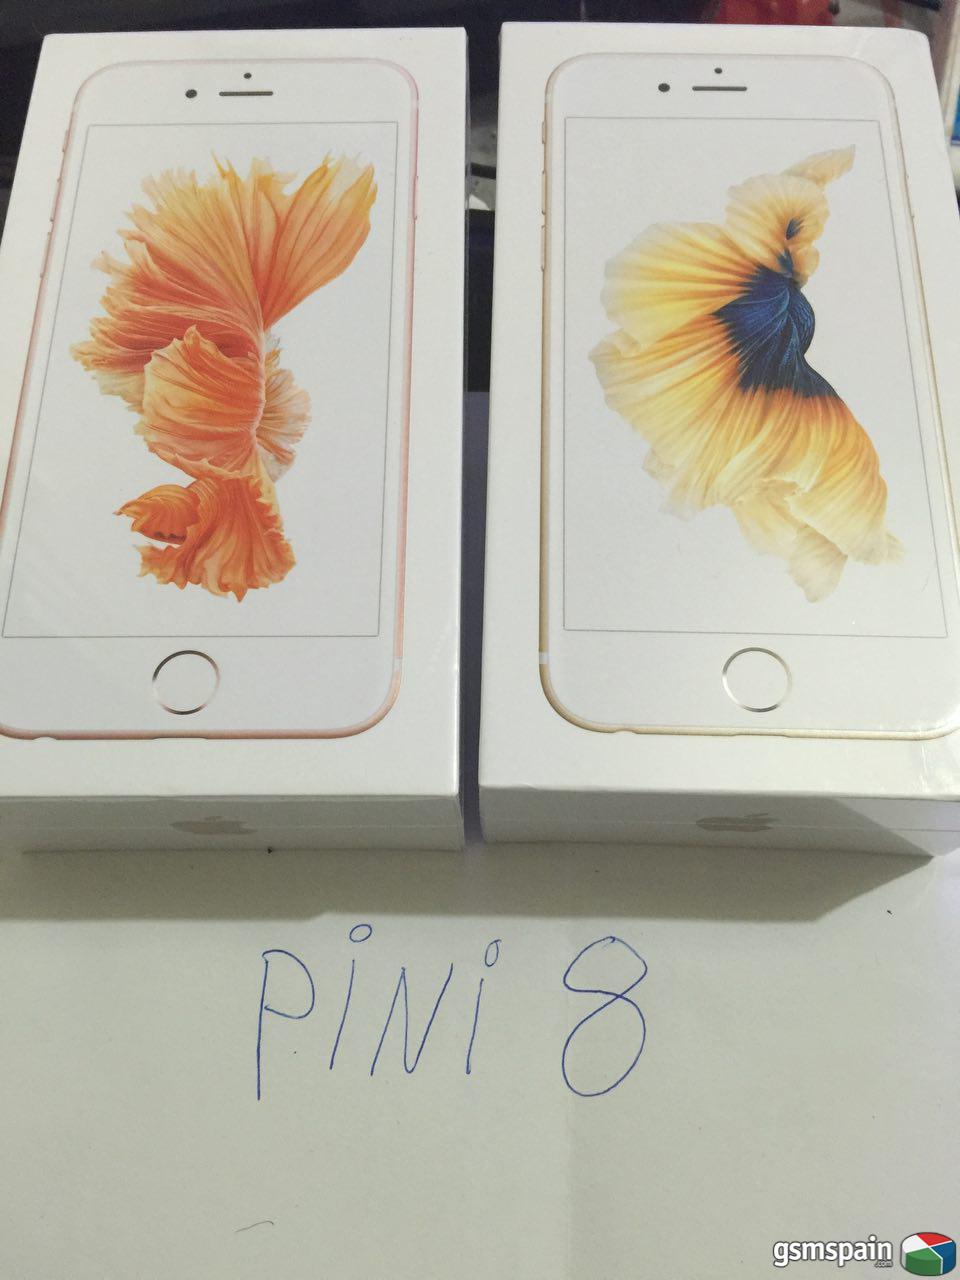 [VENDO] 2 iphone 6s 16gb oro rosa (gold rose) y oro dorado